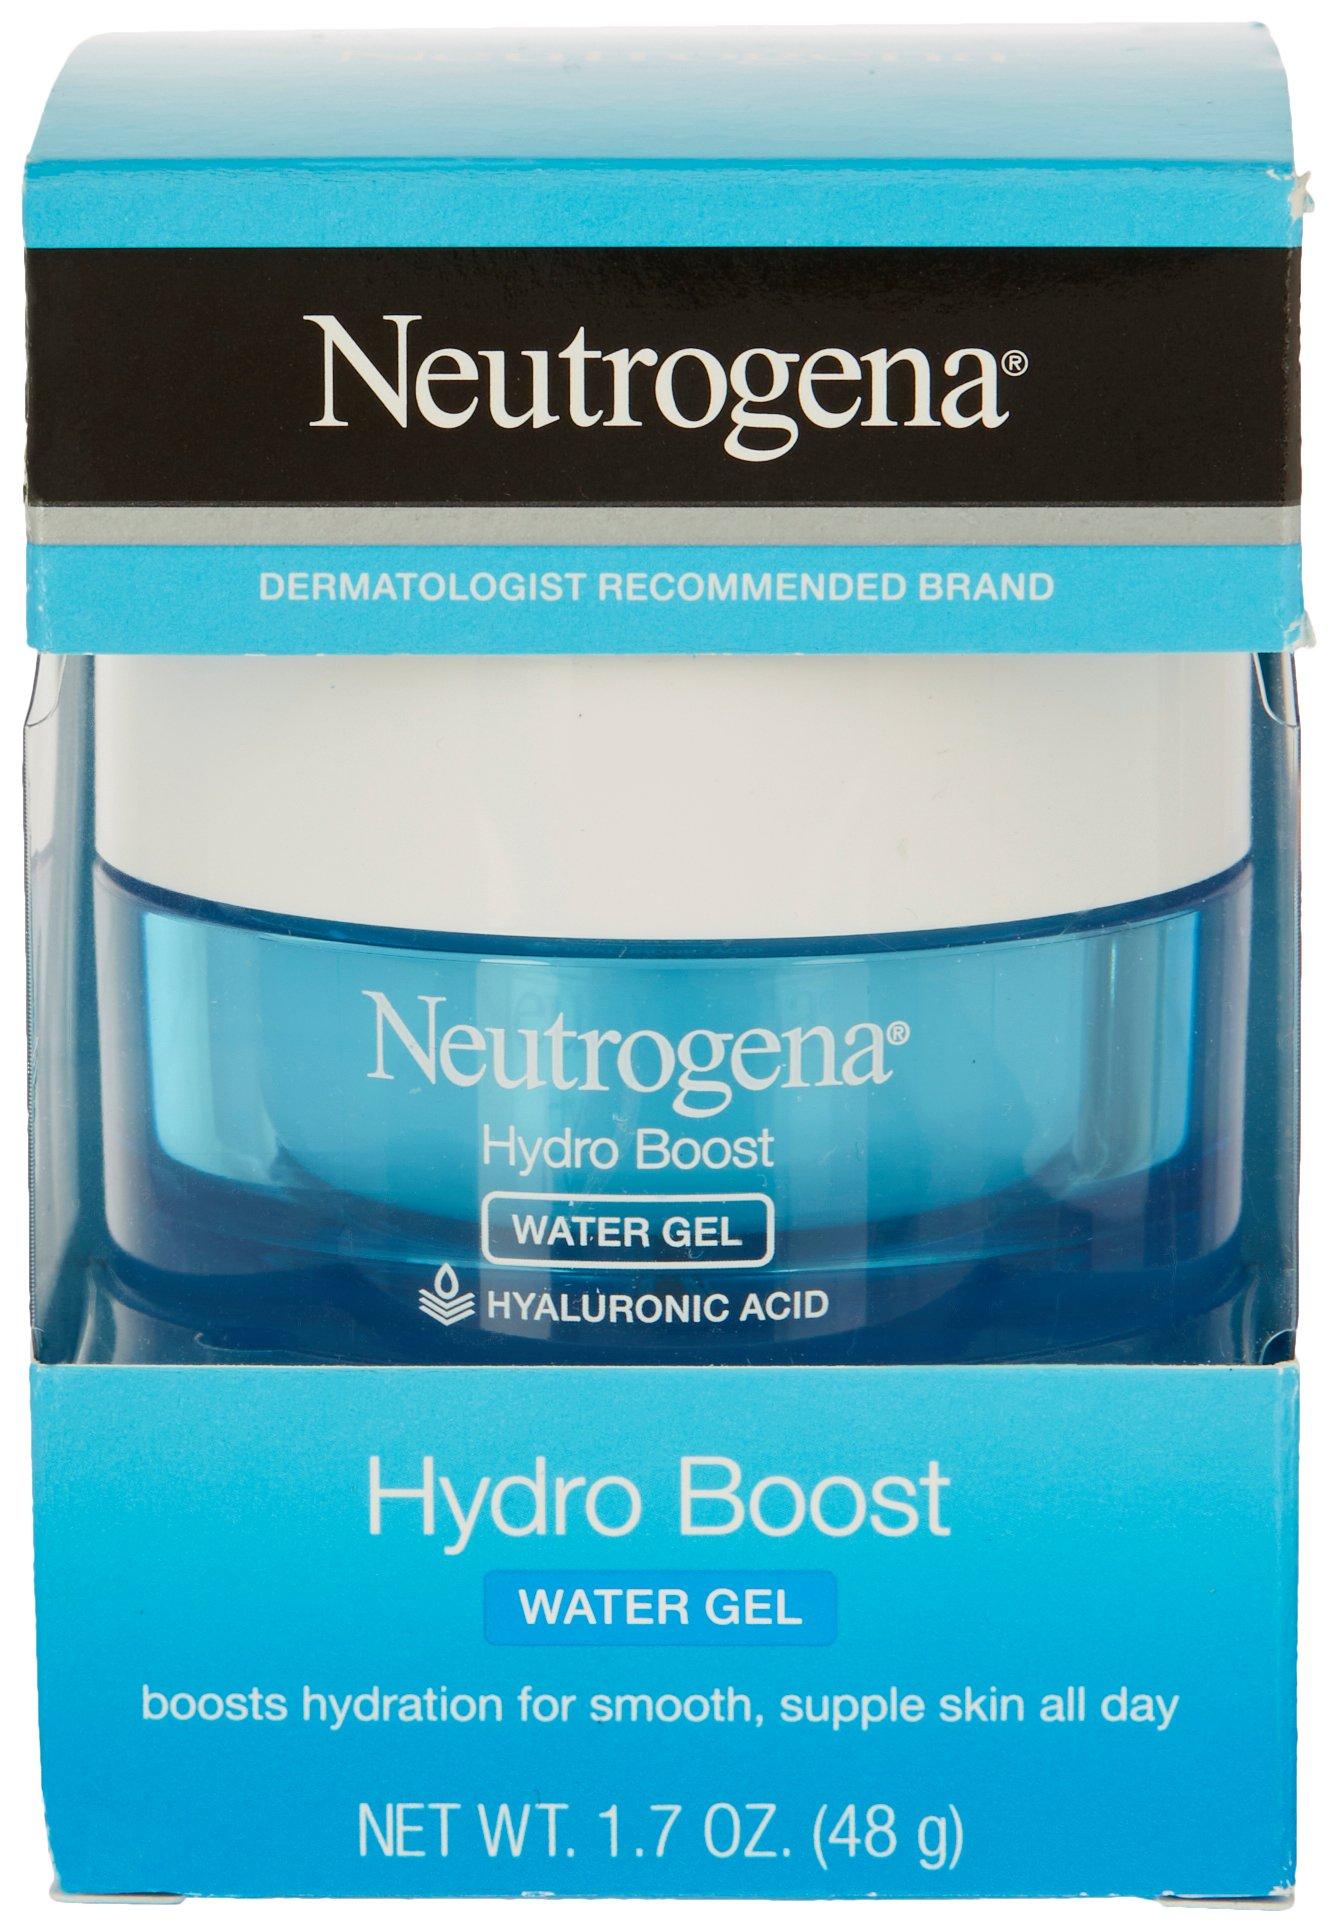 Neutrogena 1.7 oz. Hydro Boost Water Gel